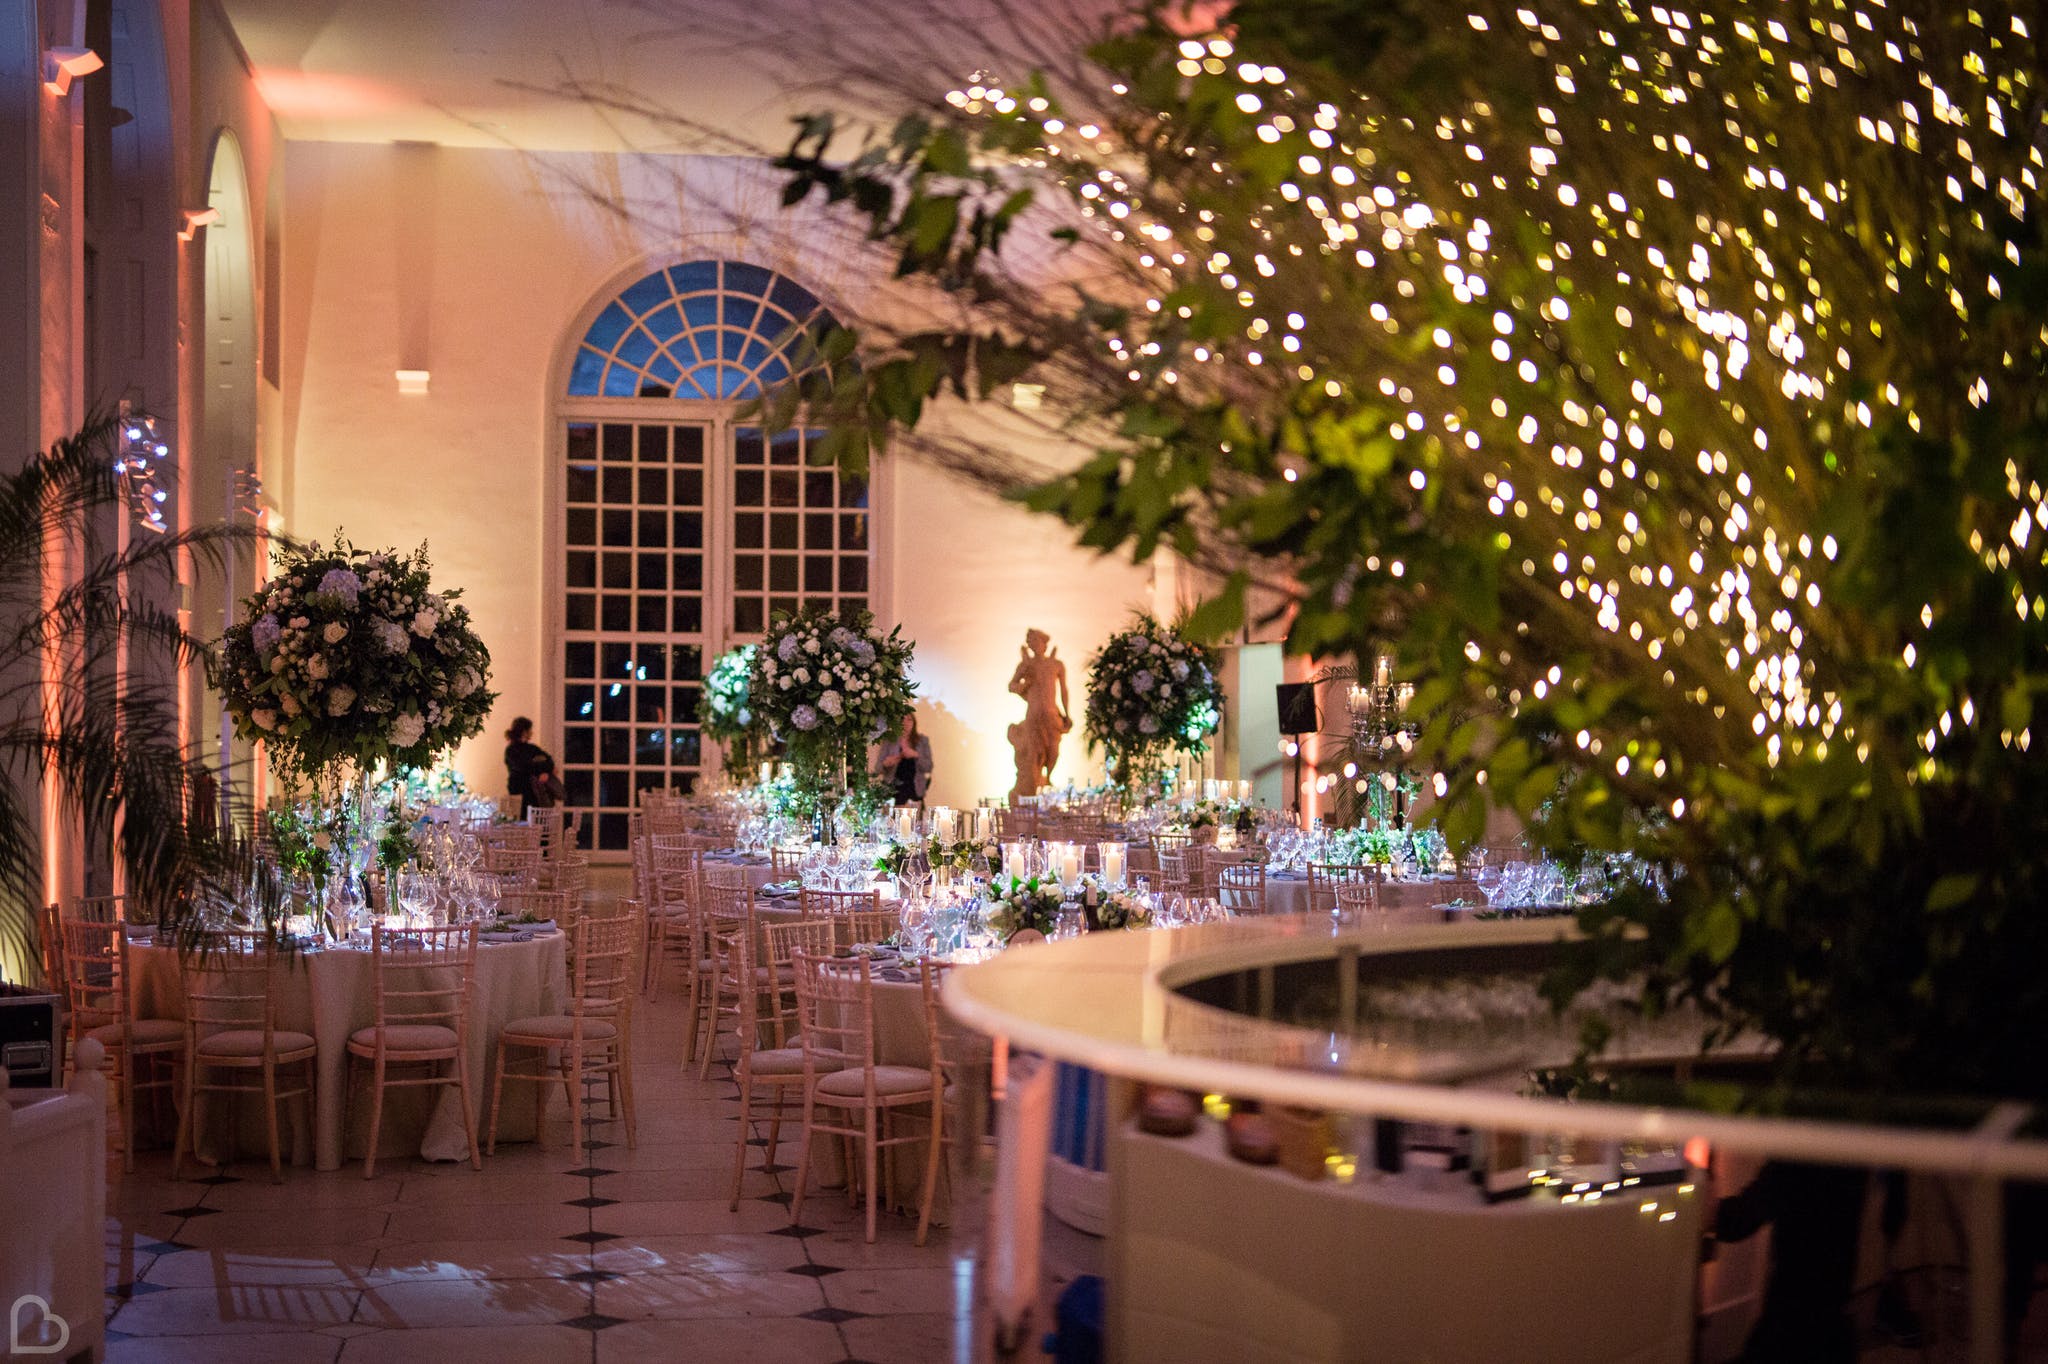 inside the royal botanical gardens, wedding reception venue in london